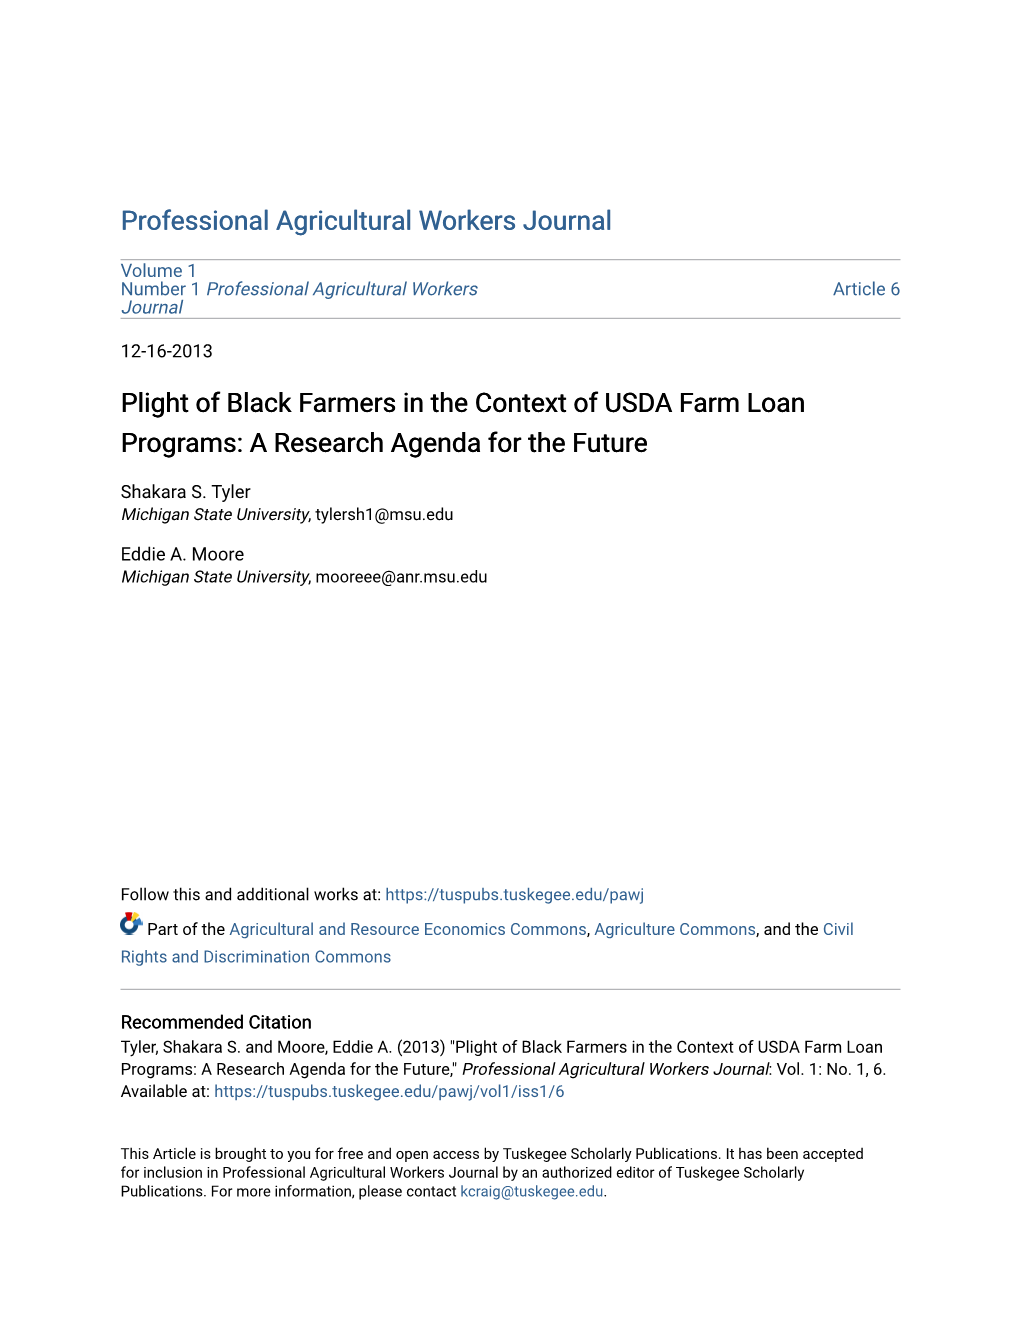 Plight of Black Farmers in the Context of USDA Farm Loan Programs: a Research Agenda for the Future